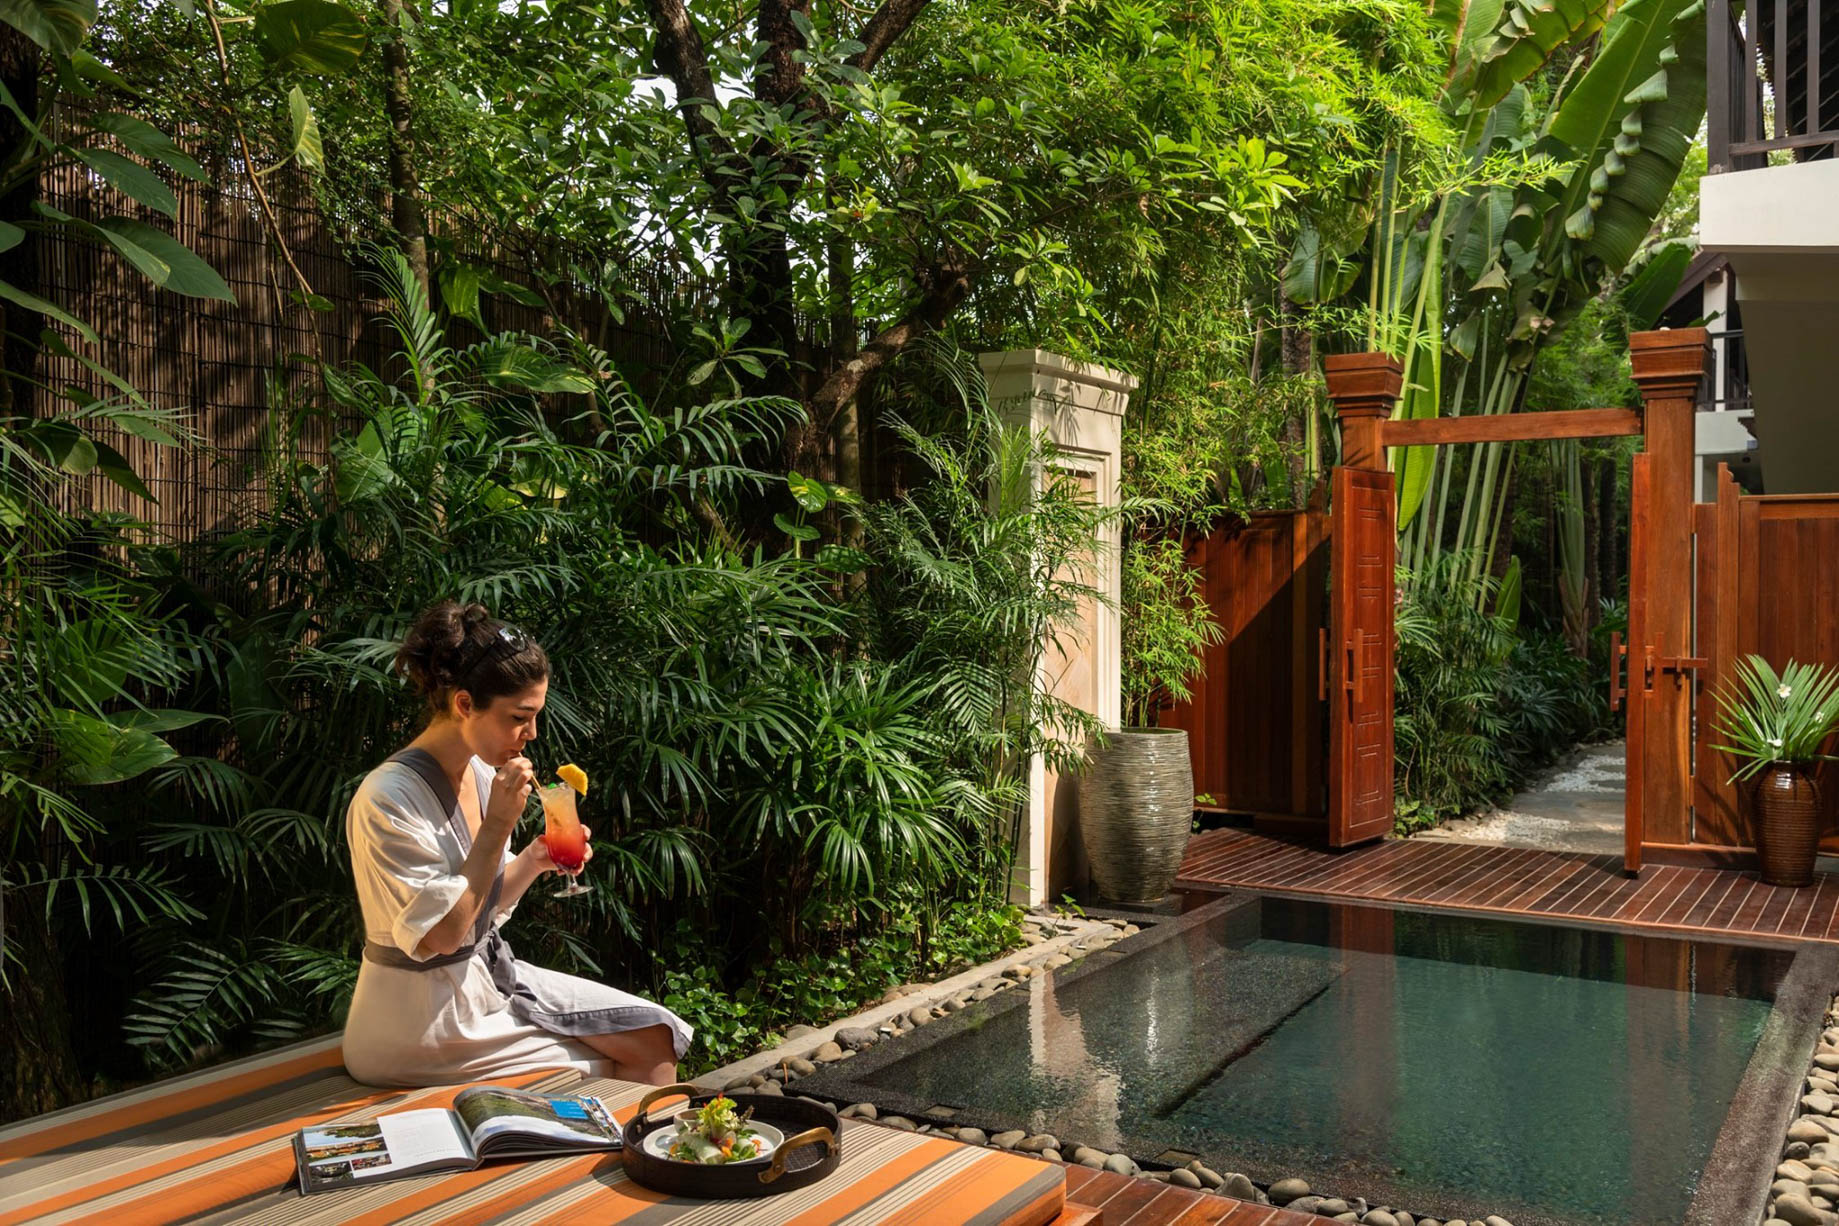 Anantara Angkor Resort – Siem Reap, Cambodia – Relaxation Pool